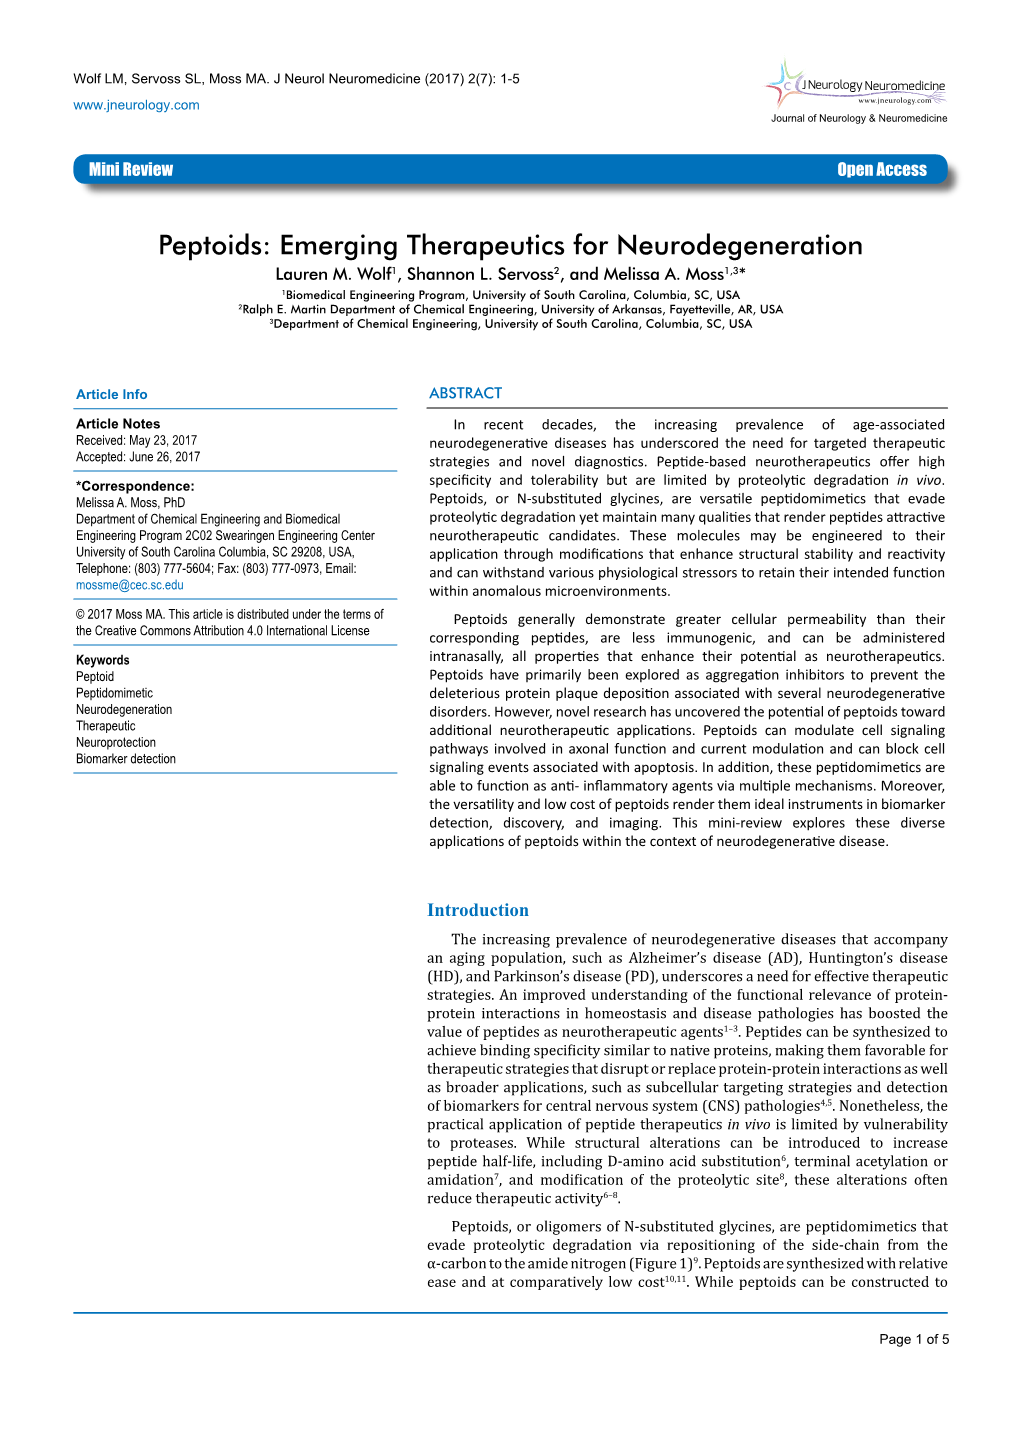 Peptoids: Emerging Therapeutics for Neurodegeneration Lauren M